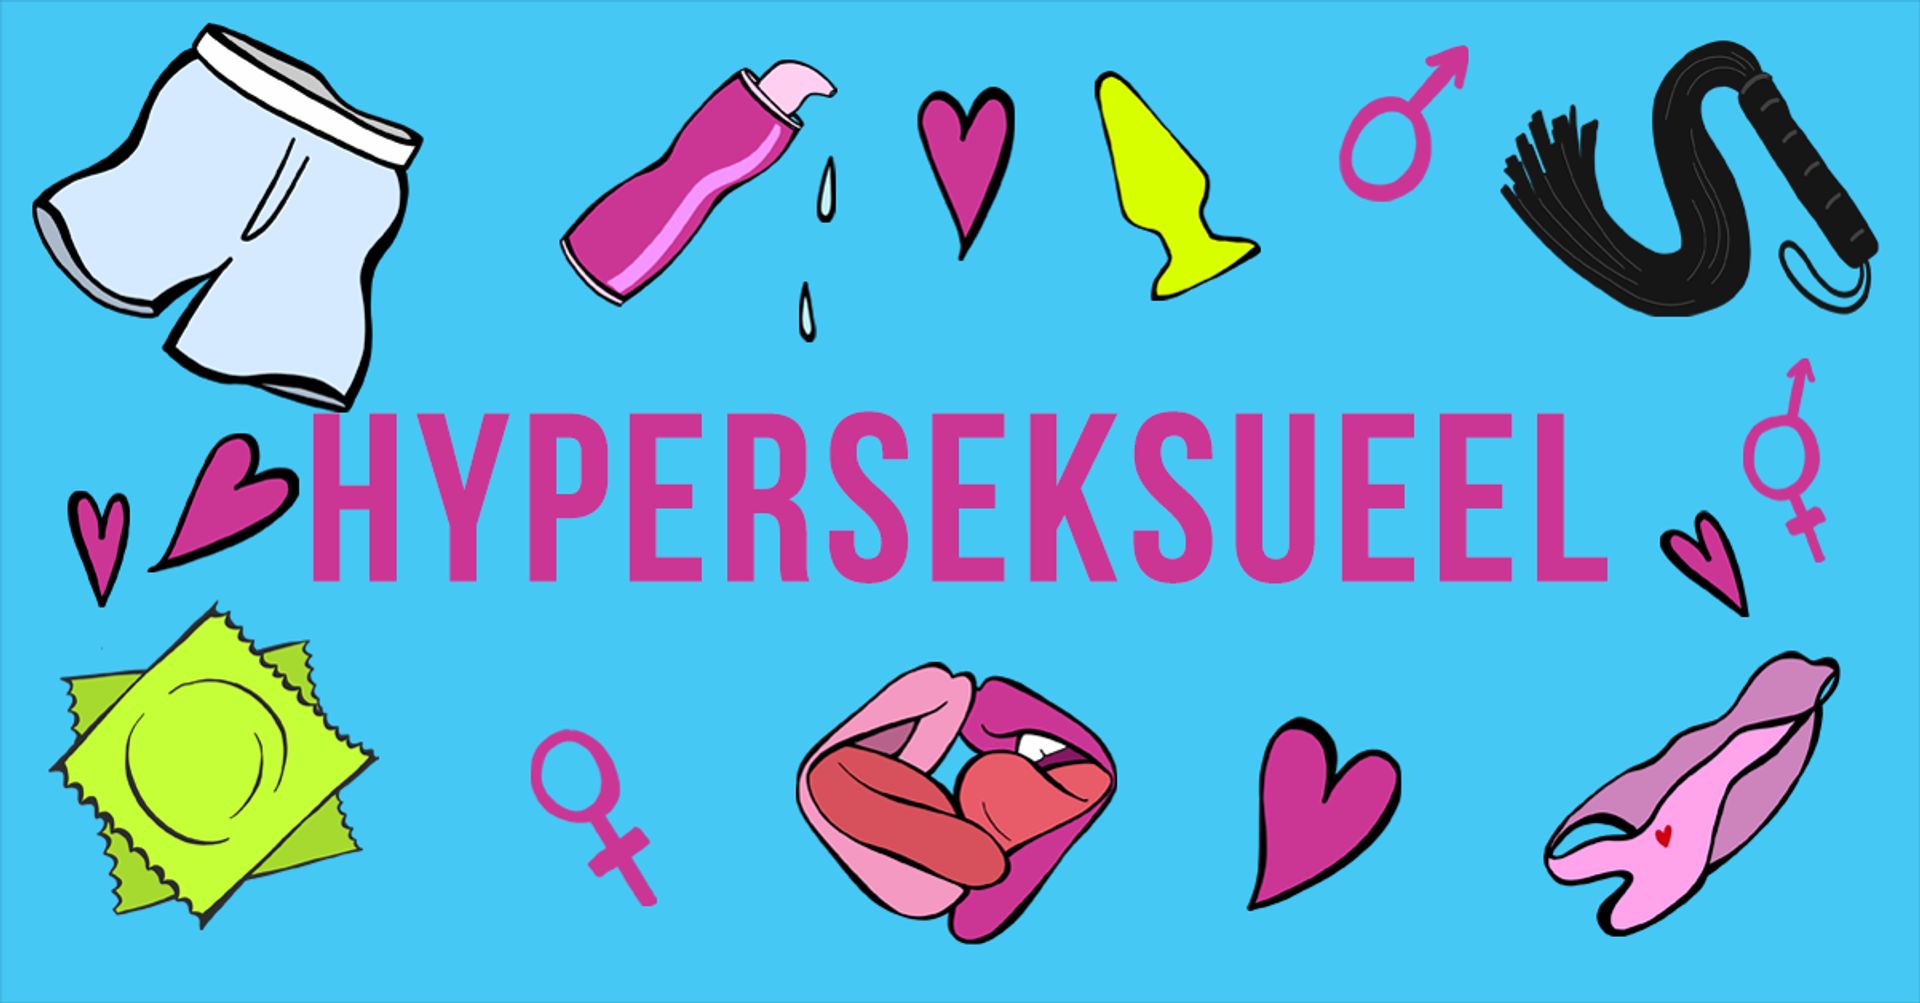 Hyperseksueel - Seks and Drugs woordenboek - Spuiten en Slikken foto